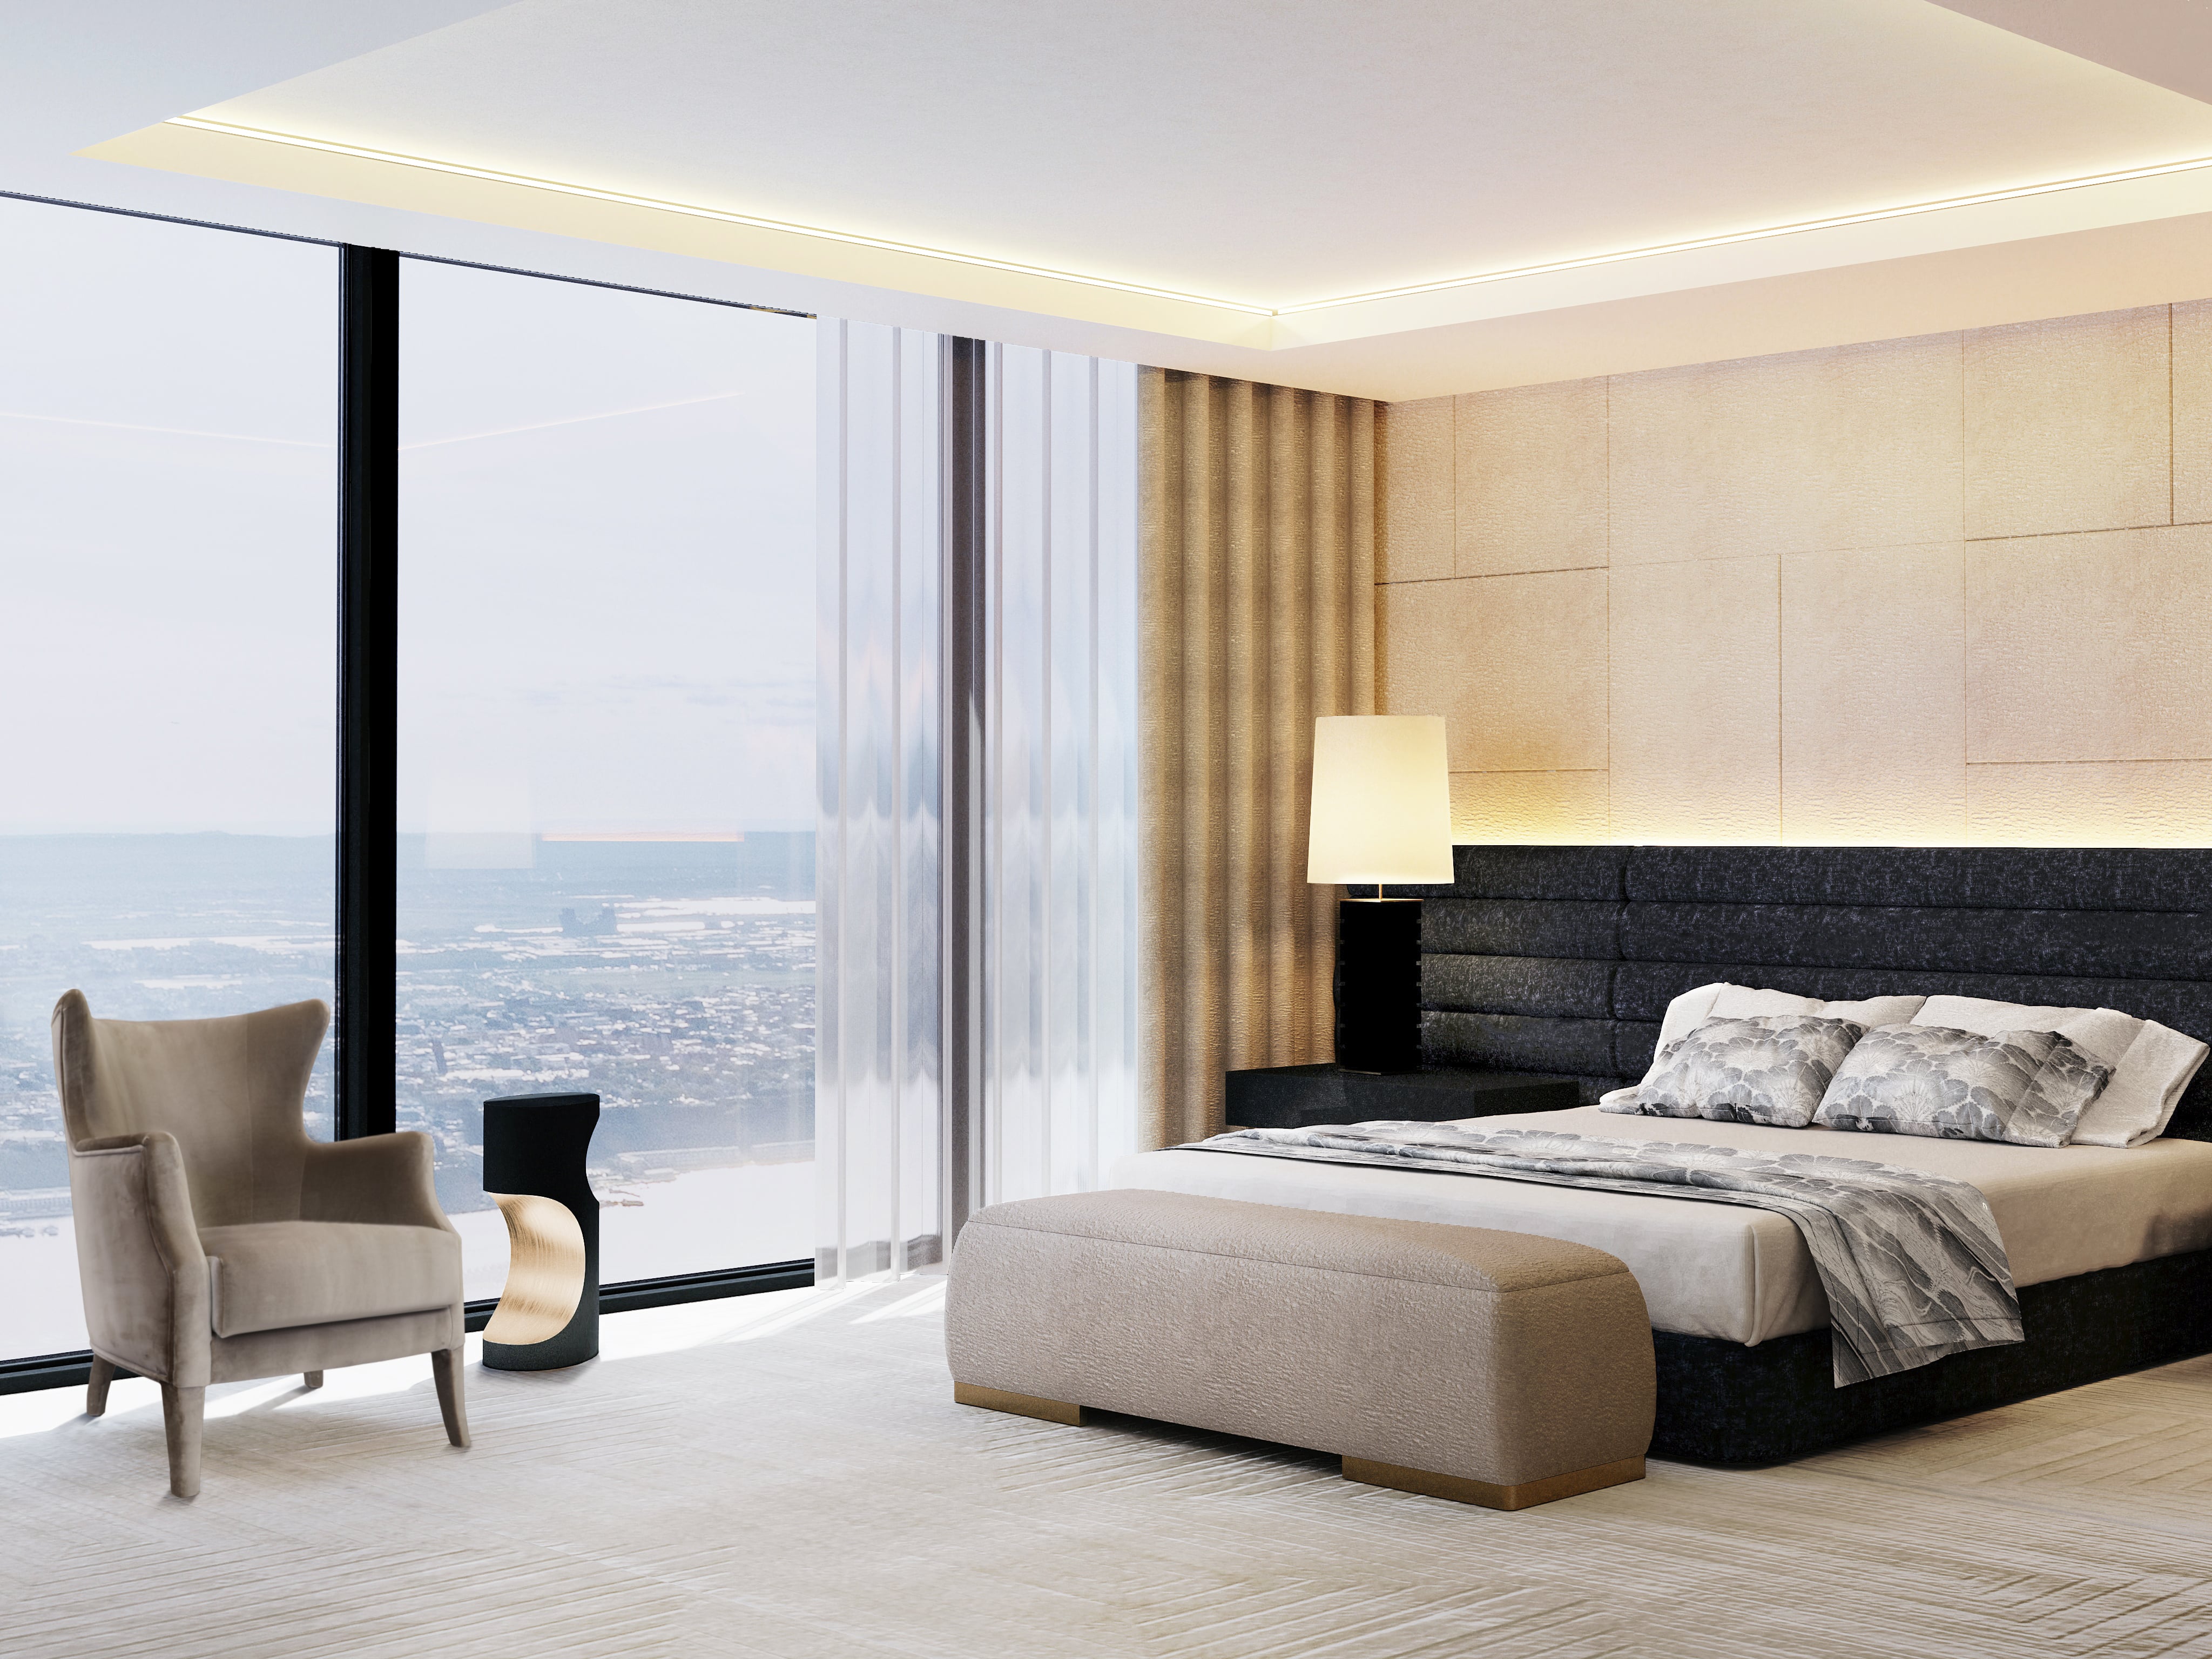 Modern Bedroom Design In Neutral Tones - Home'Society